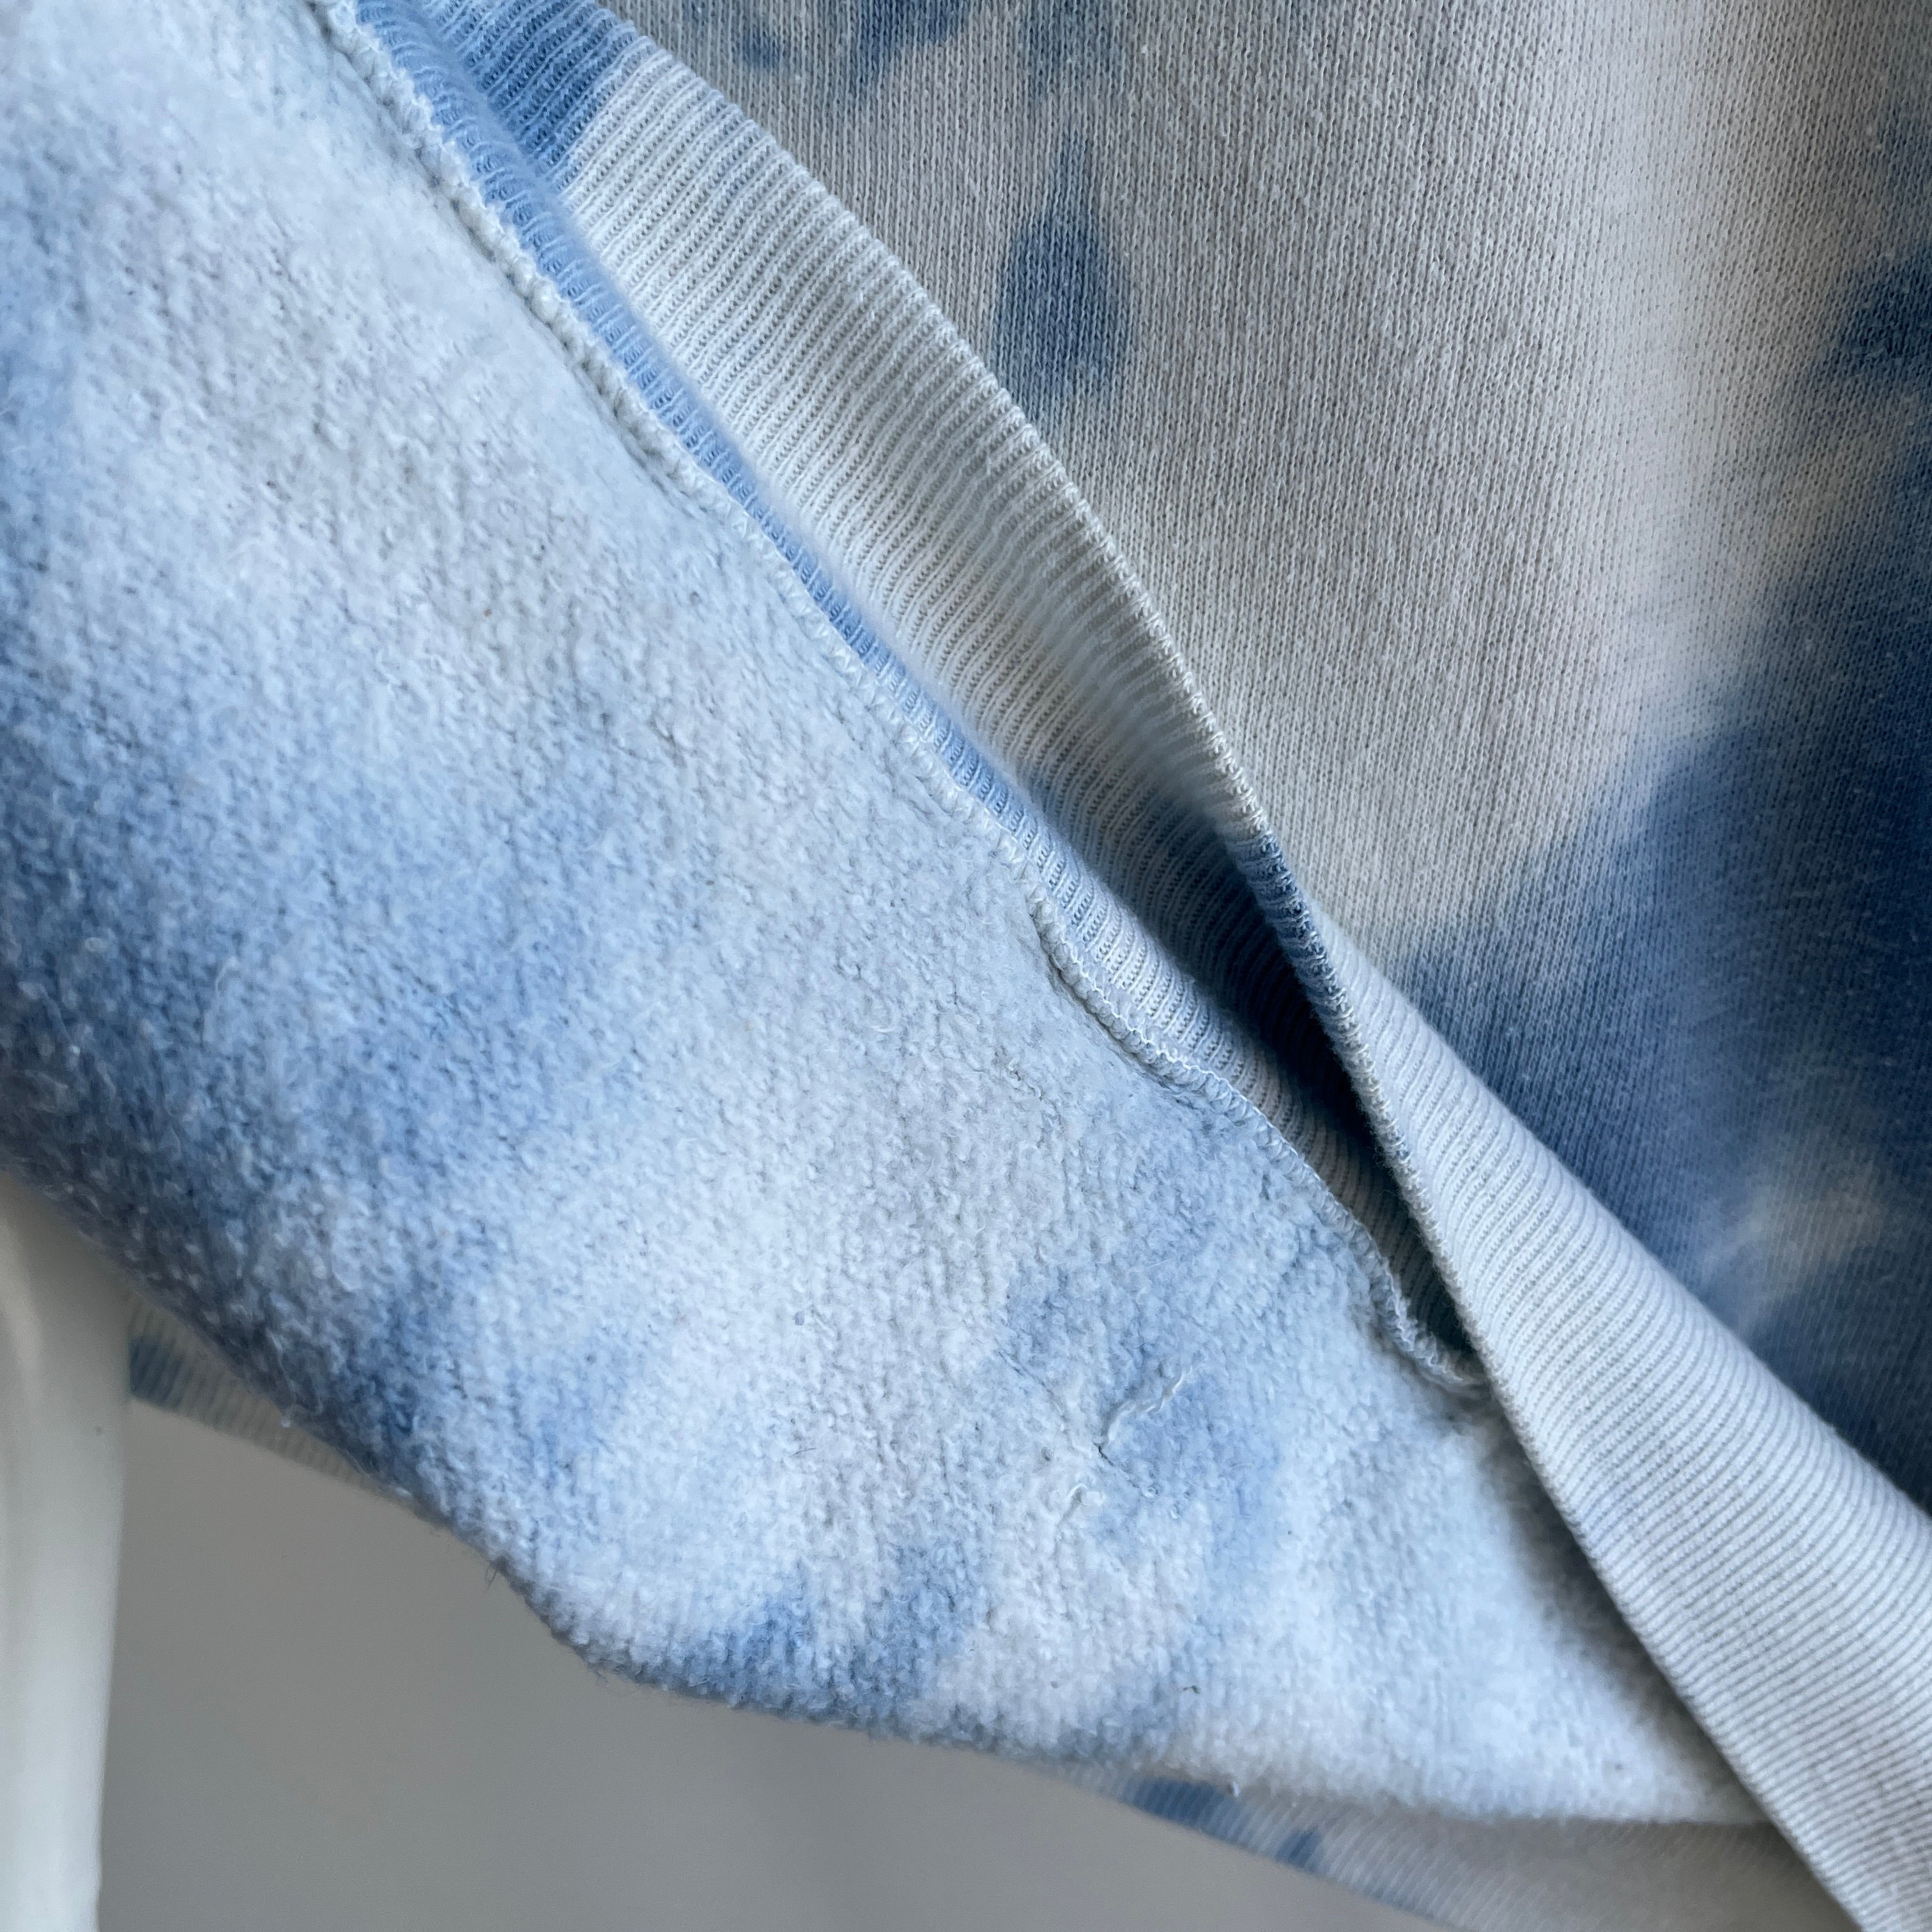 1970s Sky Blue Tie Dye Raglan - Mostly Cotton